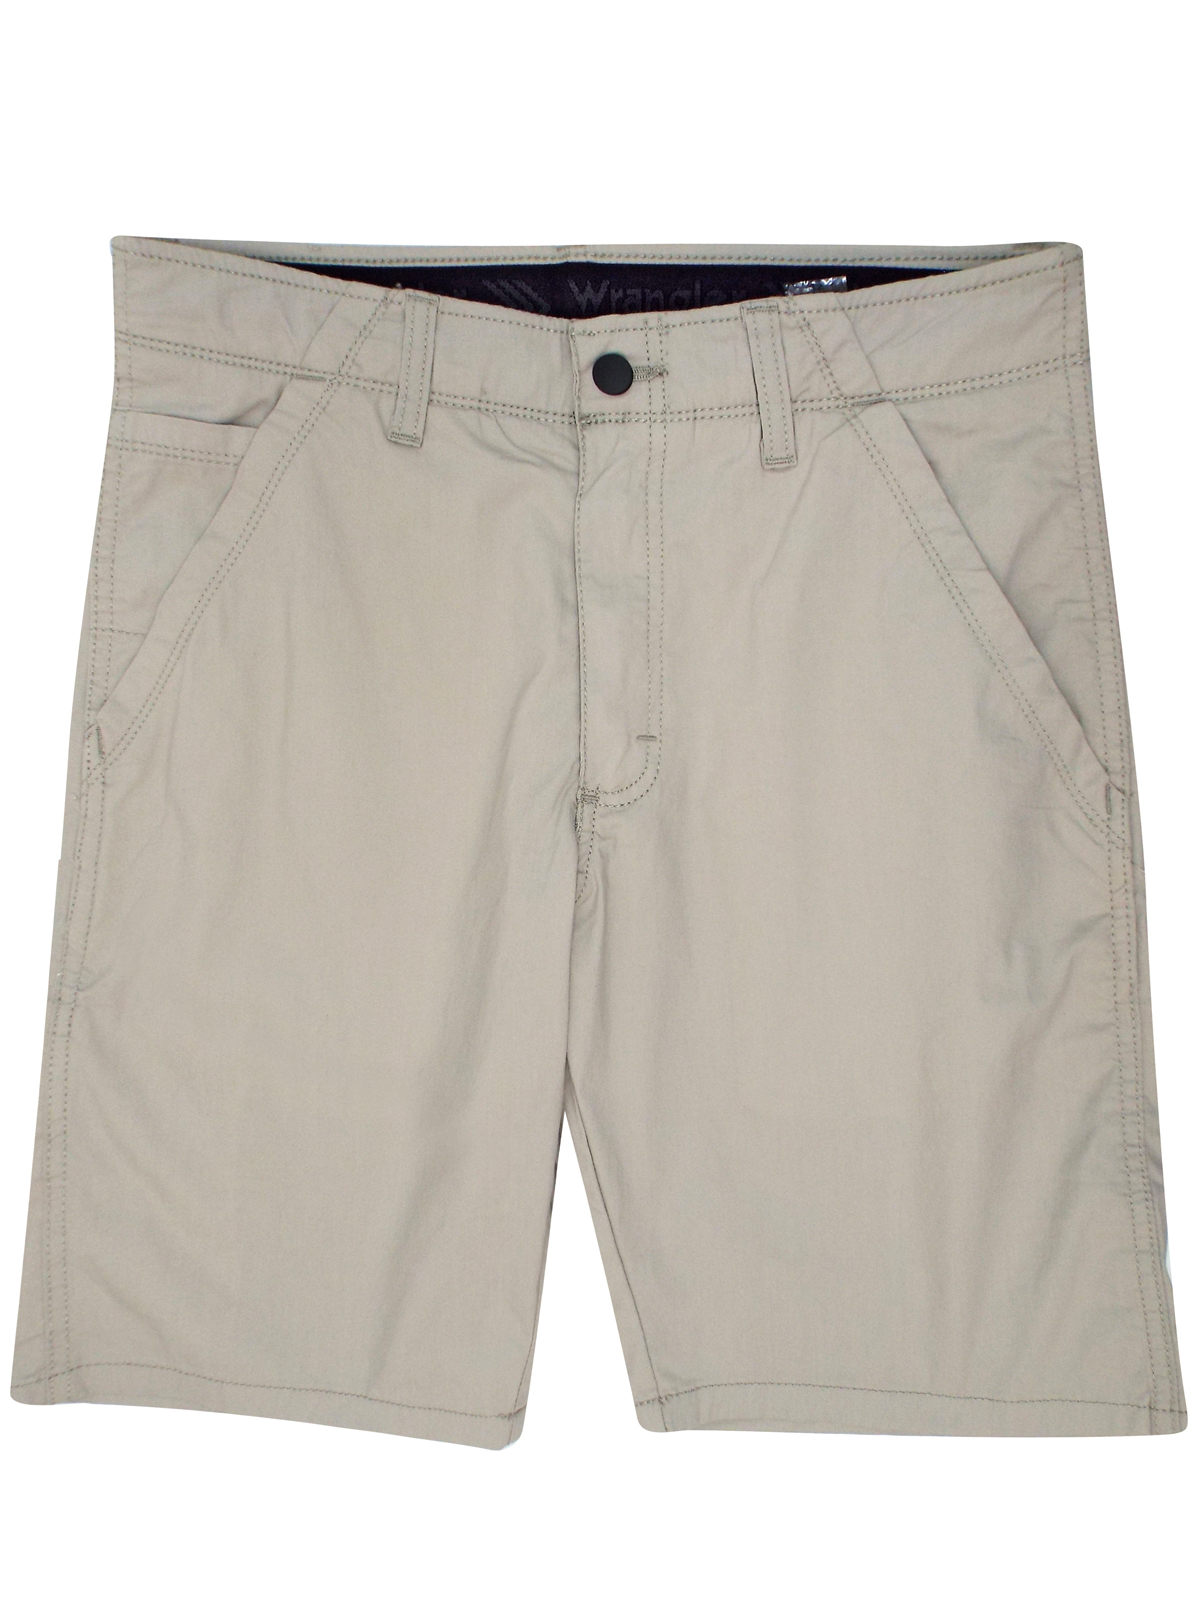 Wrangler - - Wr4ngler STONE Pure Cotton Twill Shorts - Waist Size 32 to 42